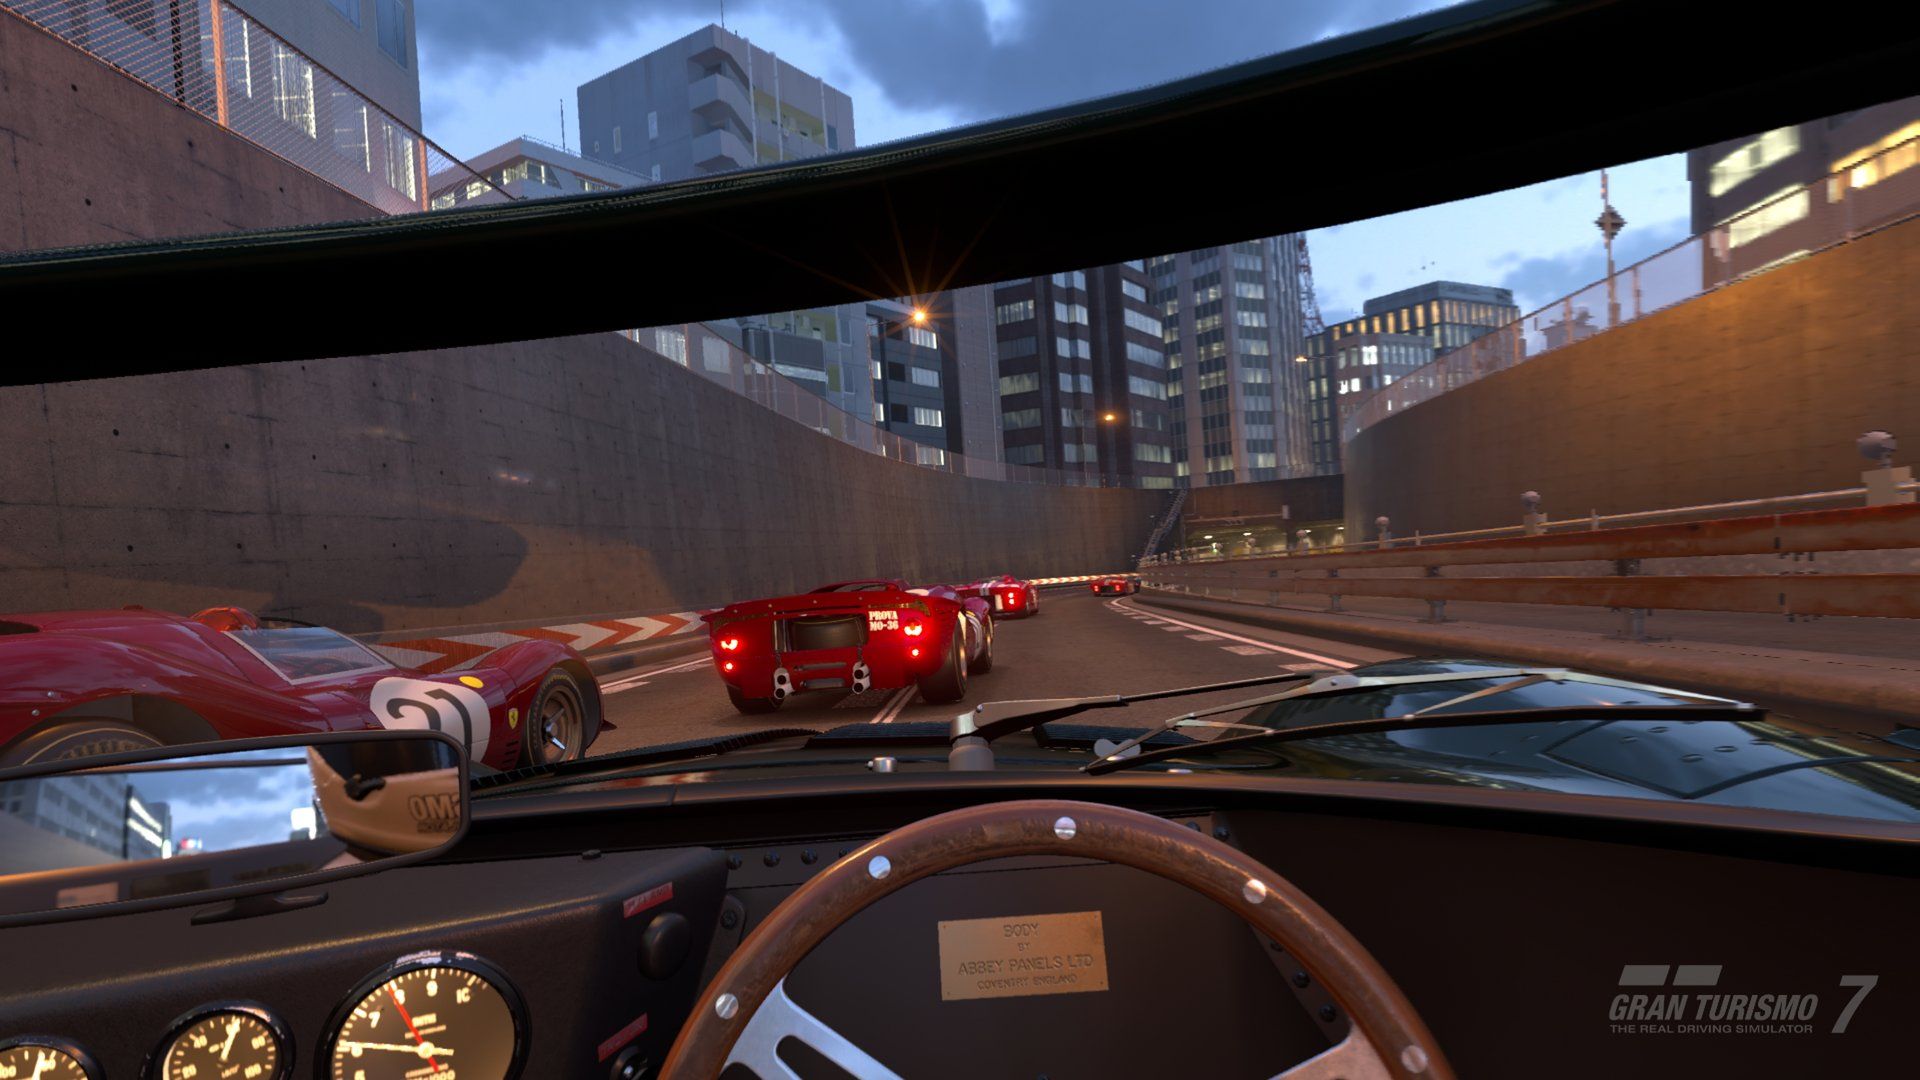 Gran Turismo 7 – Update Version 1.29 Receives First Trailer, New